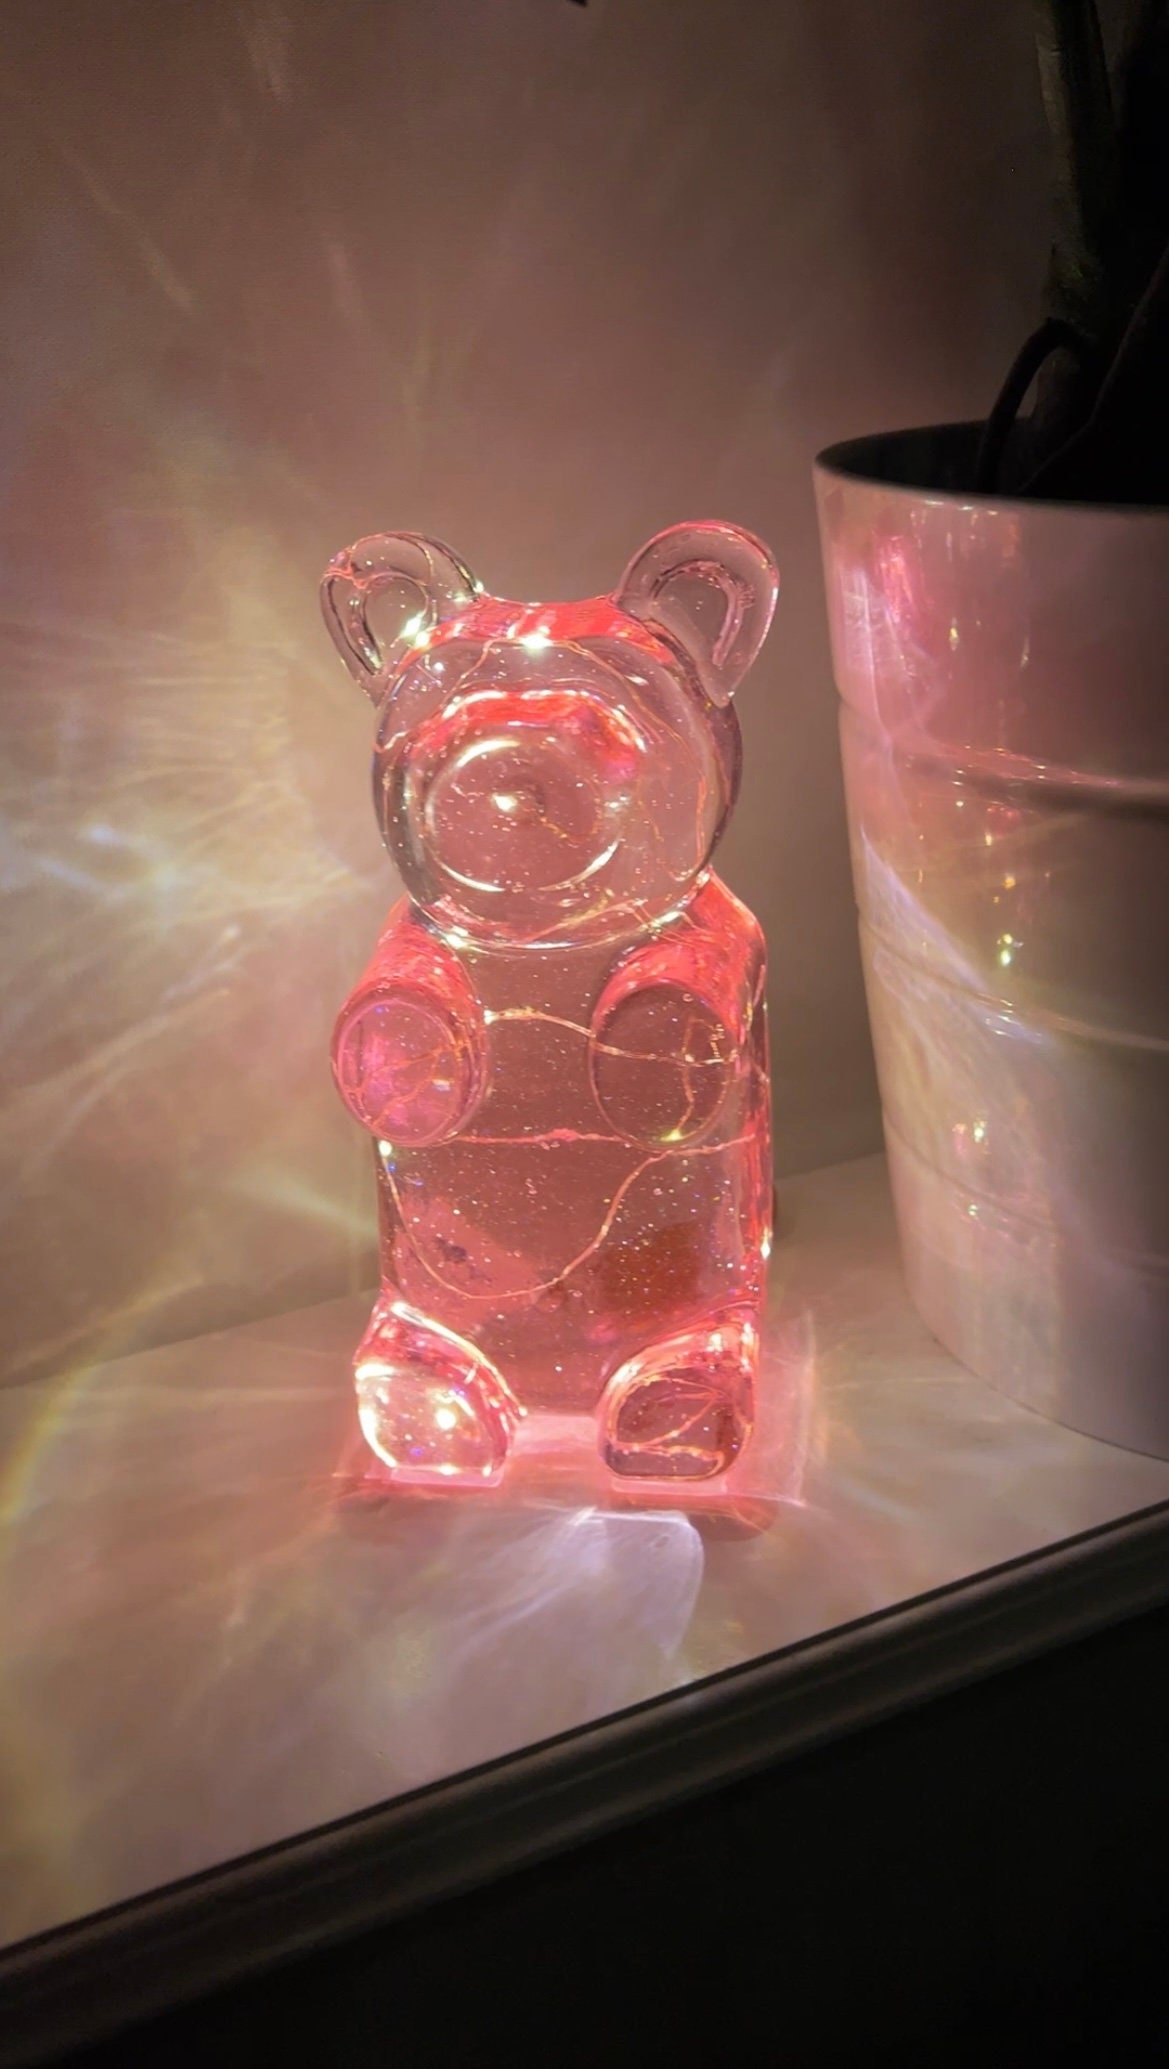 Gummy Bear Red Nightlight - - Fat Brain Toys